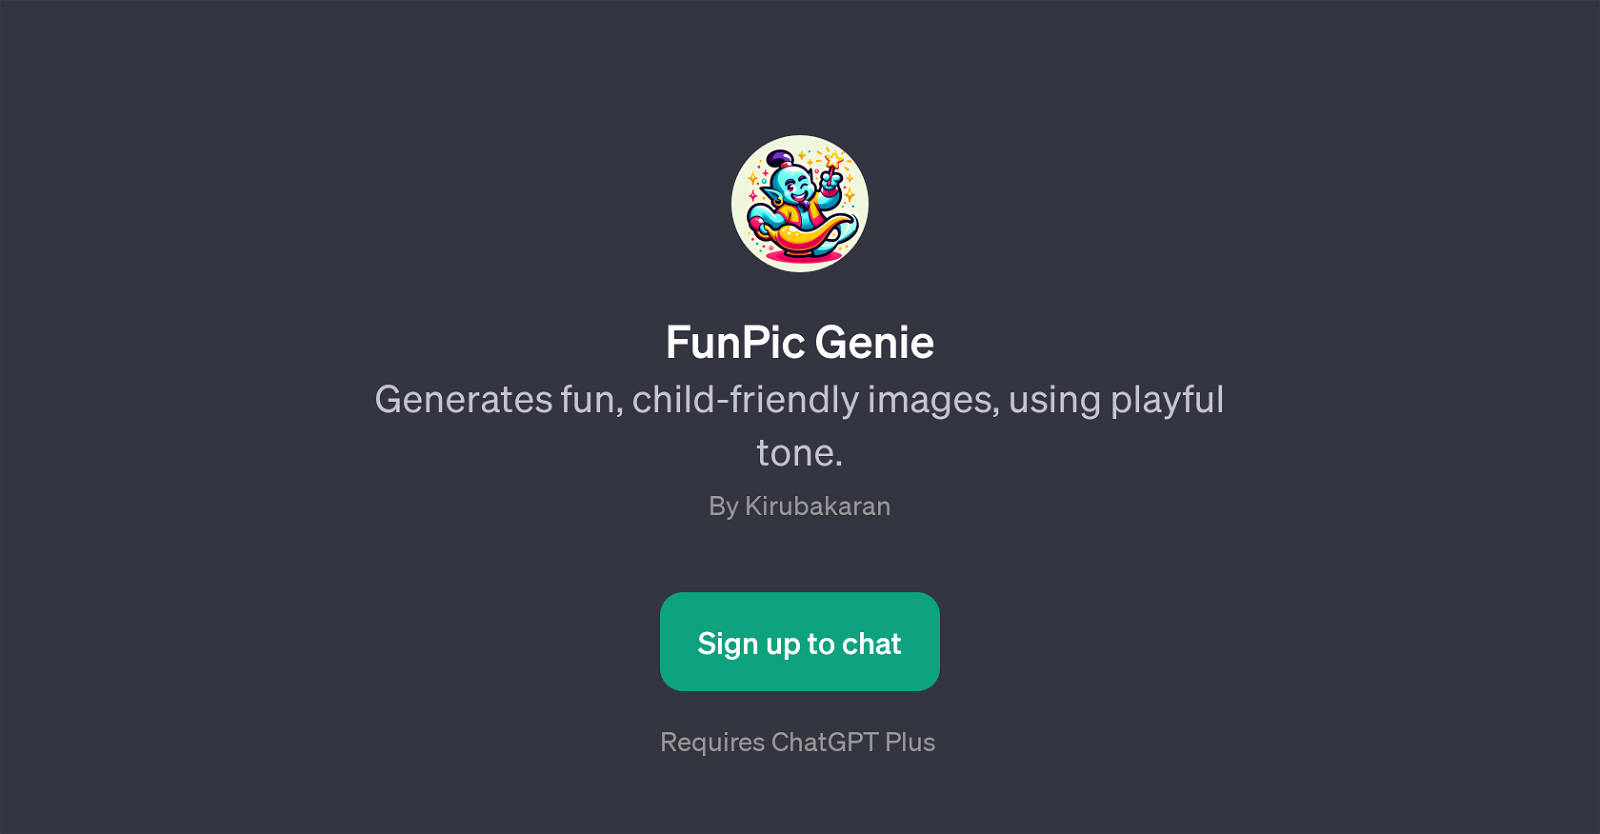 FunPic Genie website